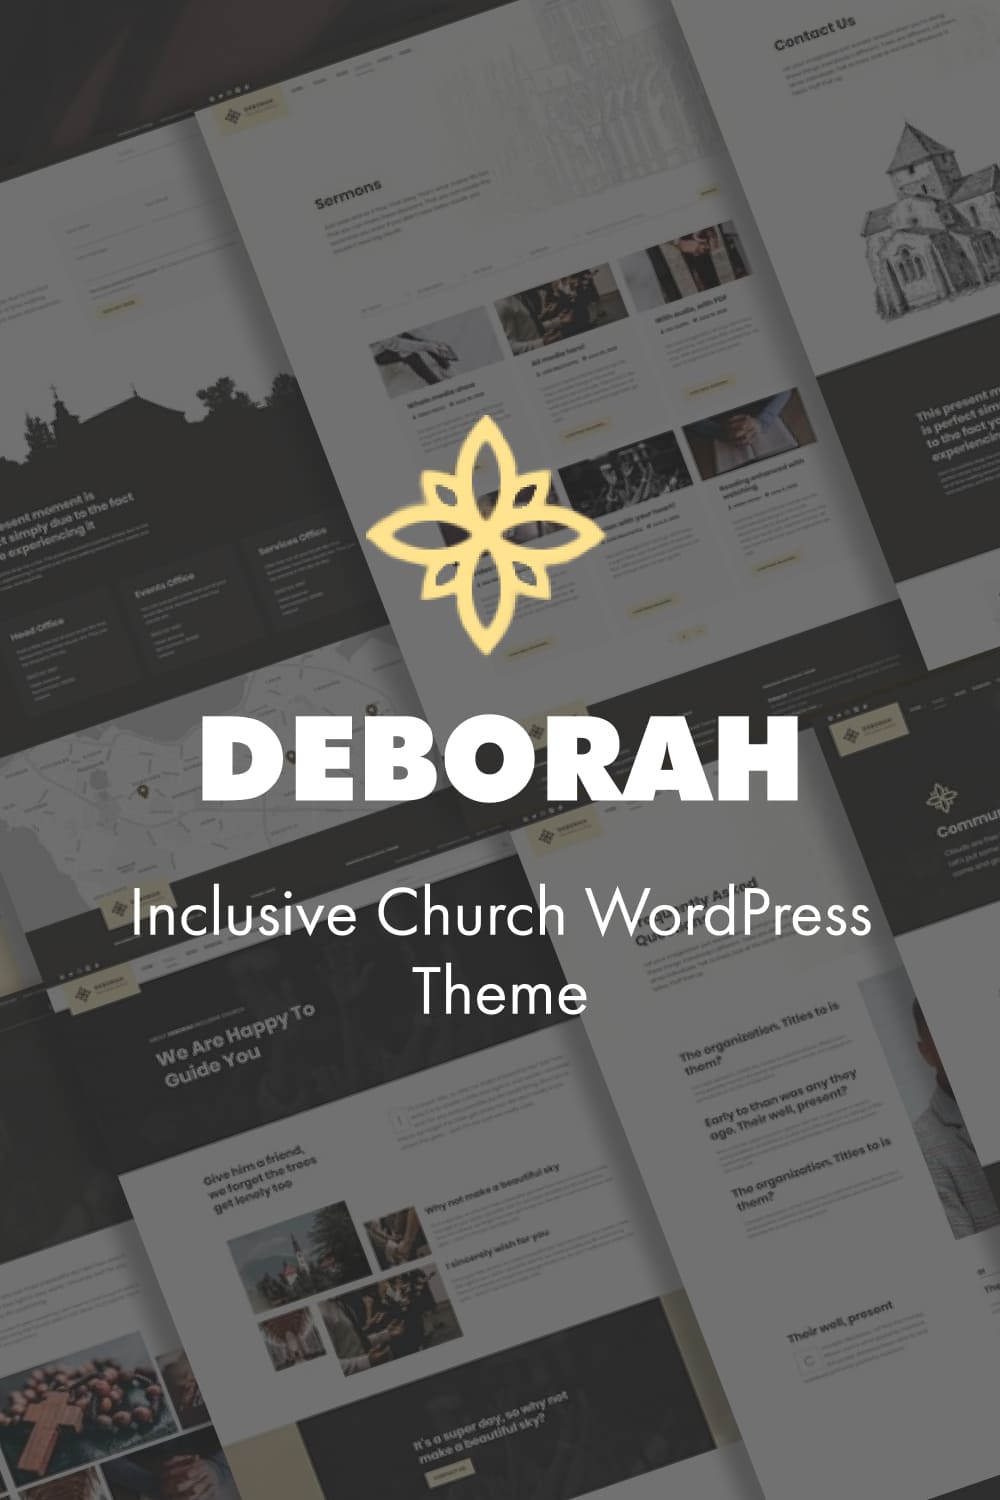 Deborah inclusive church wordpress theme on the dark blackground.